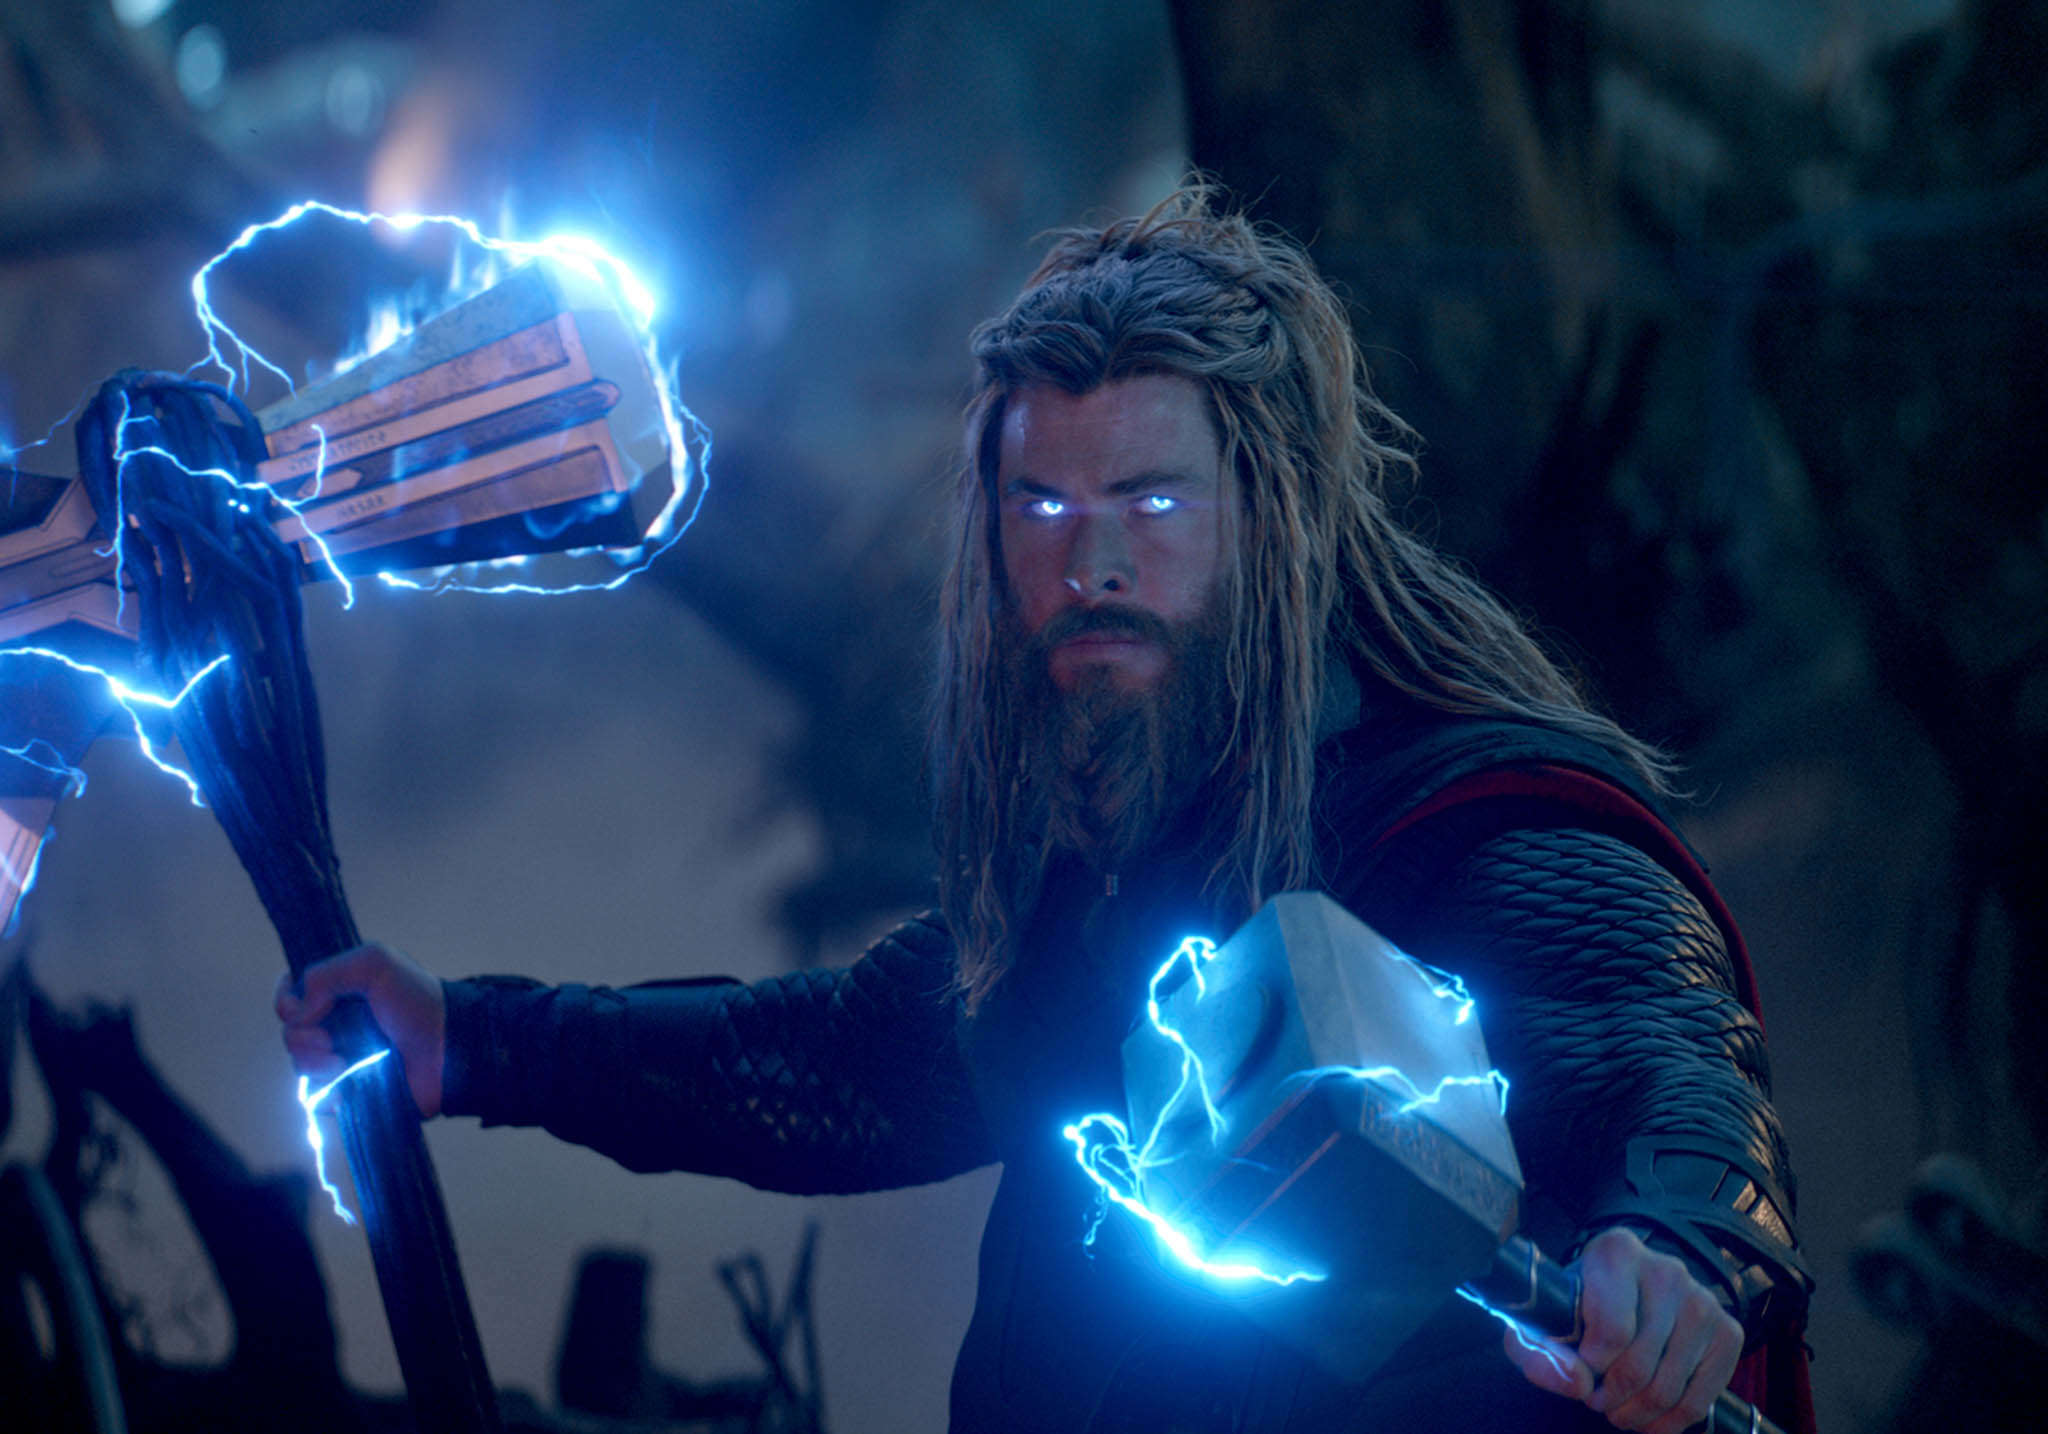 Thor Wielding Mjolnir and Stormbreaker